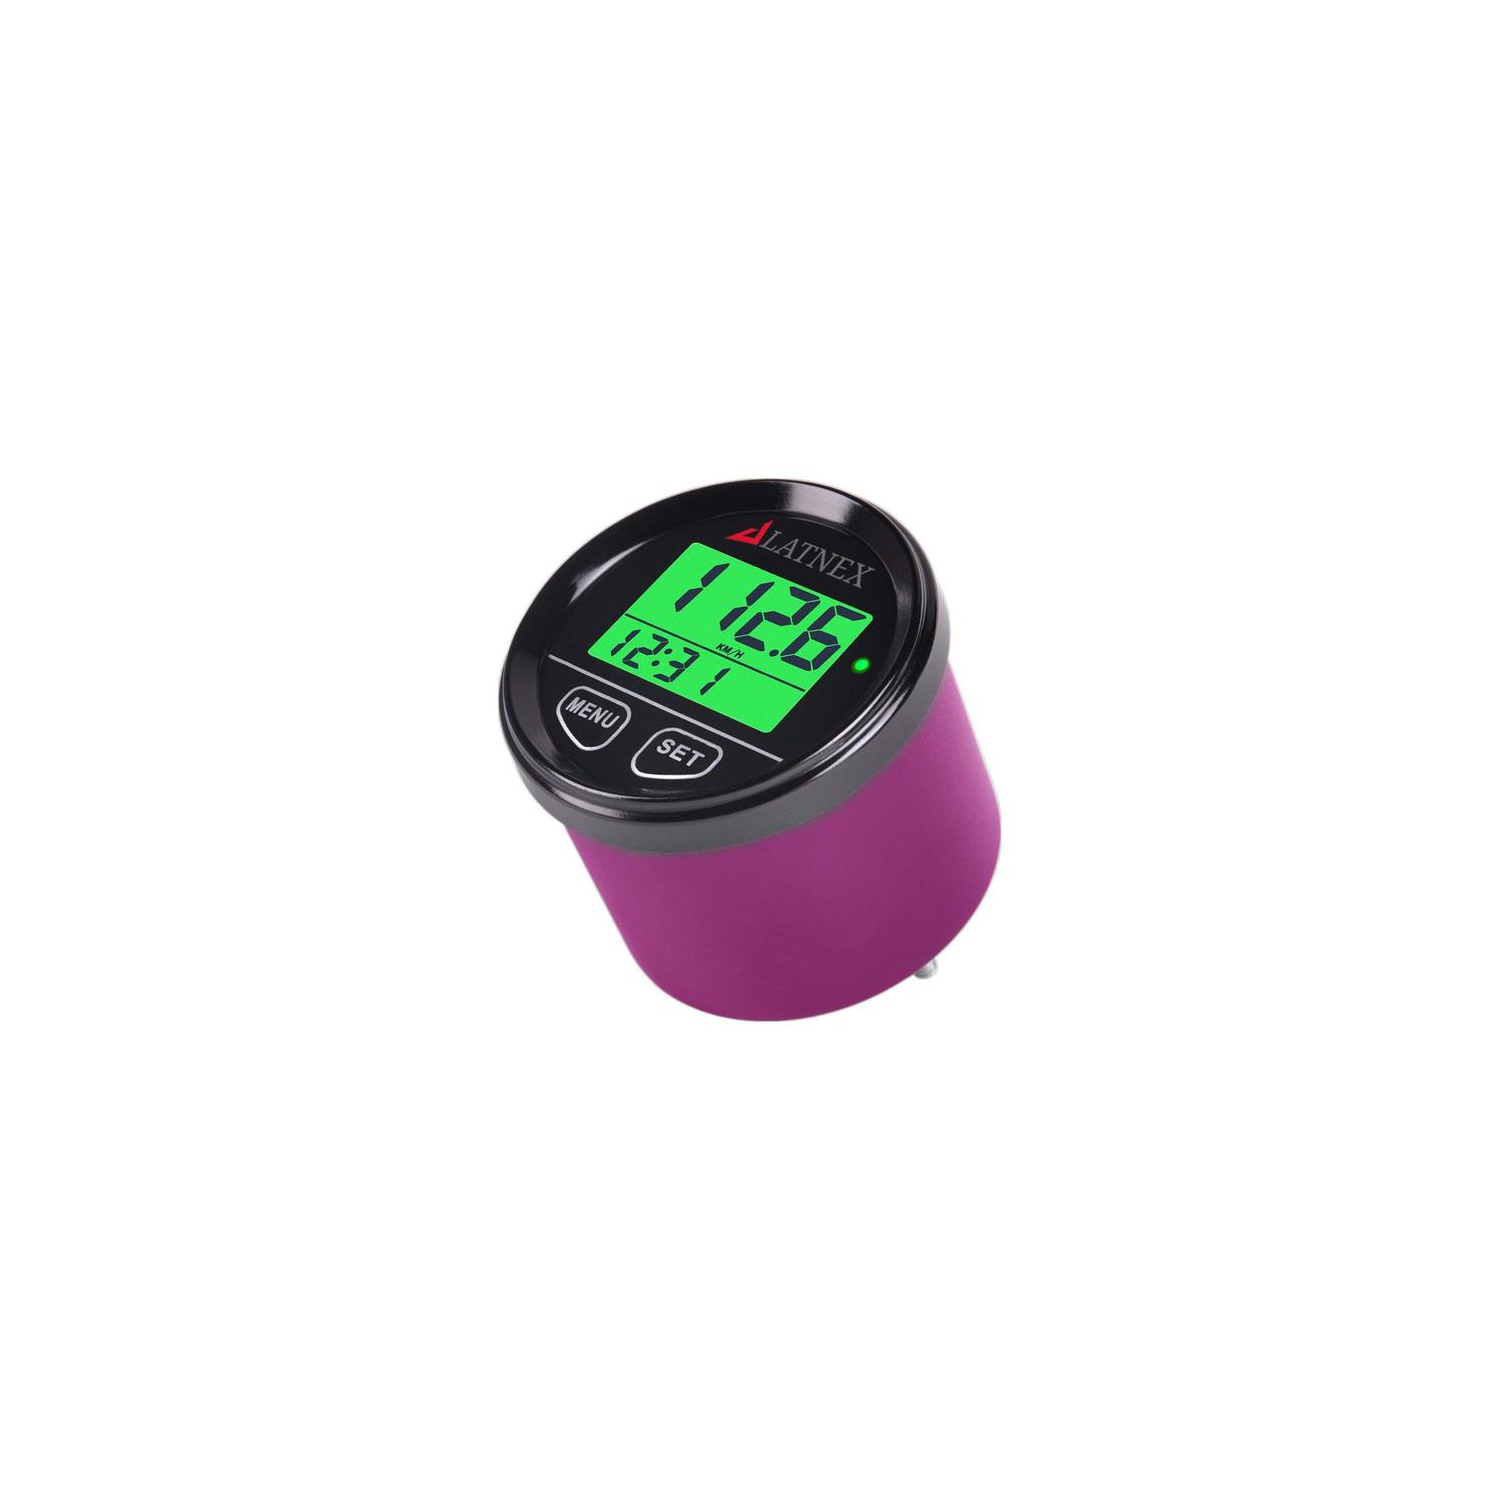 Waterproof Digital GPS Speedometer Backlight for ATV UTV-MARINE-Boats-Motorcycle- Automobile Motor Vehicle Bikes (Purple)